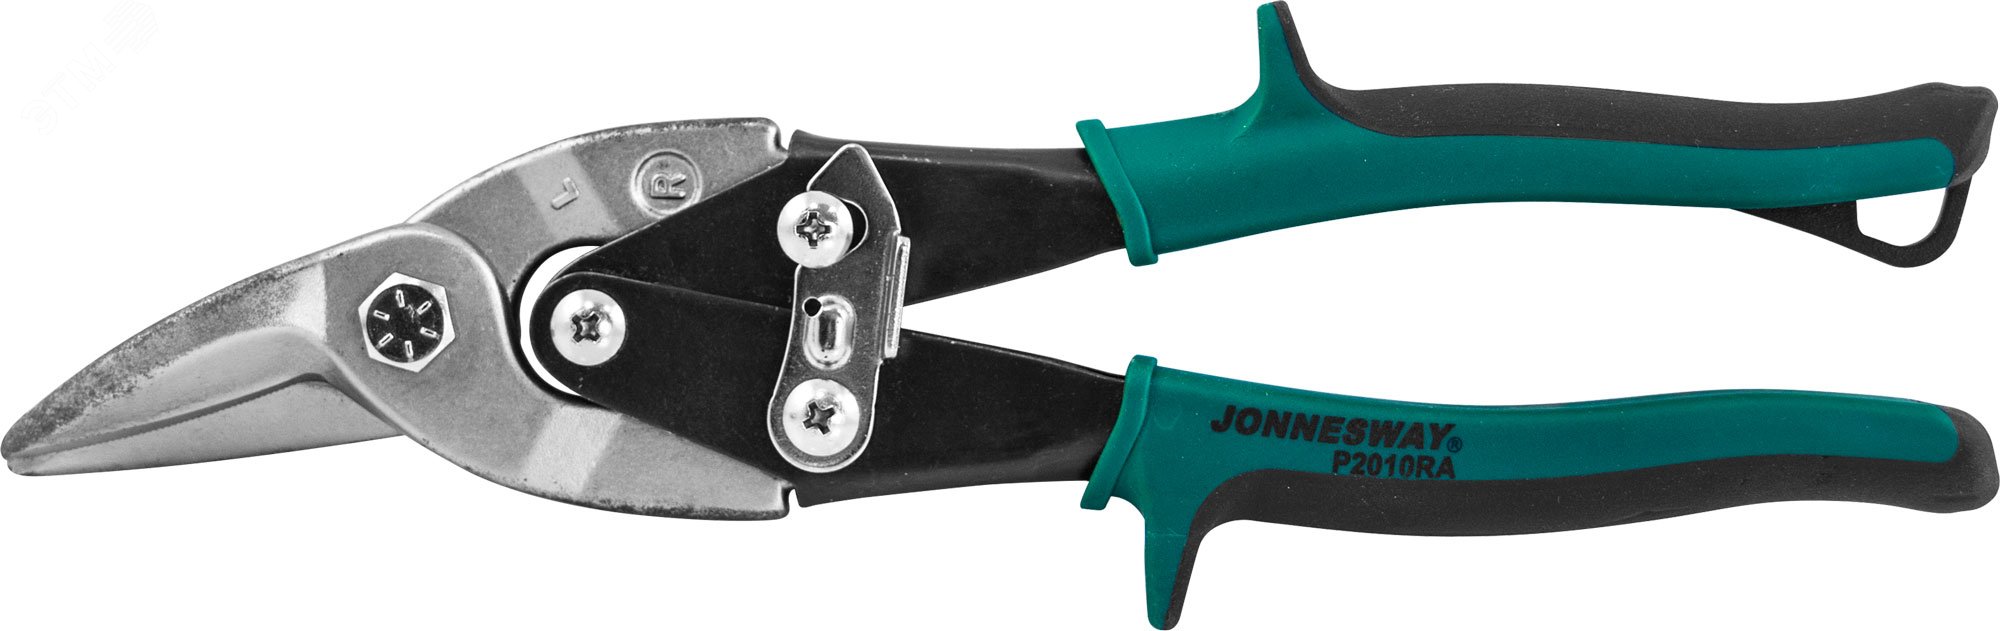 Ножницы по металлу правого реза, 250 мм P2010RA Jonnesway